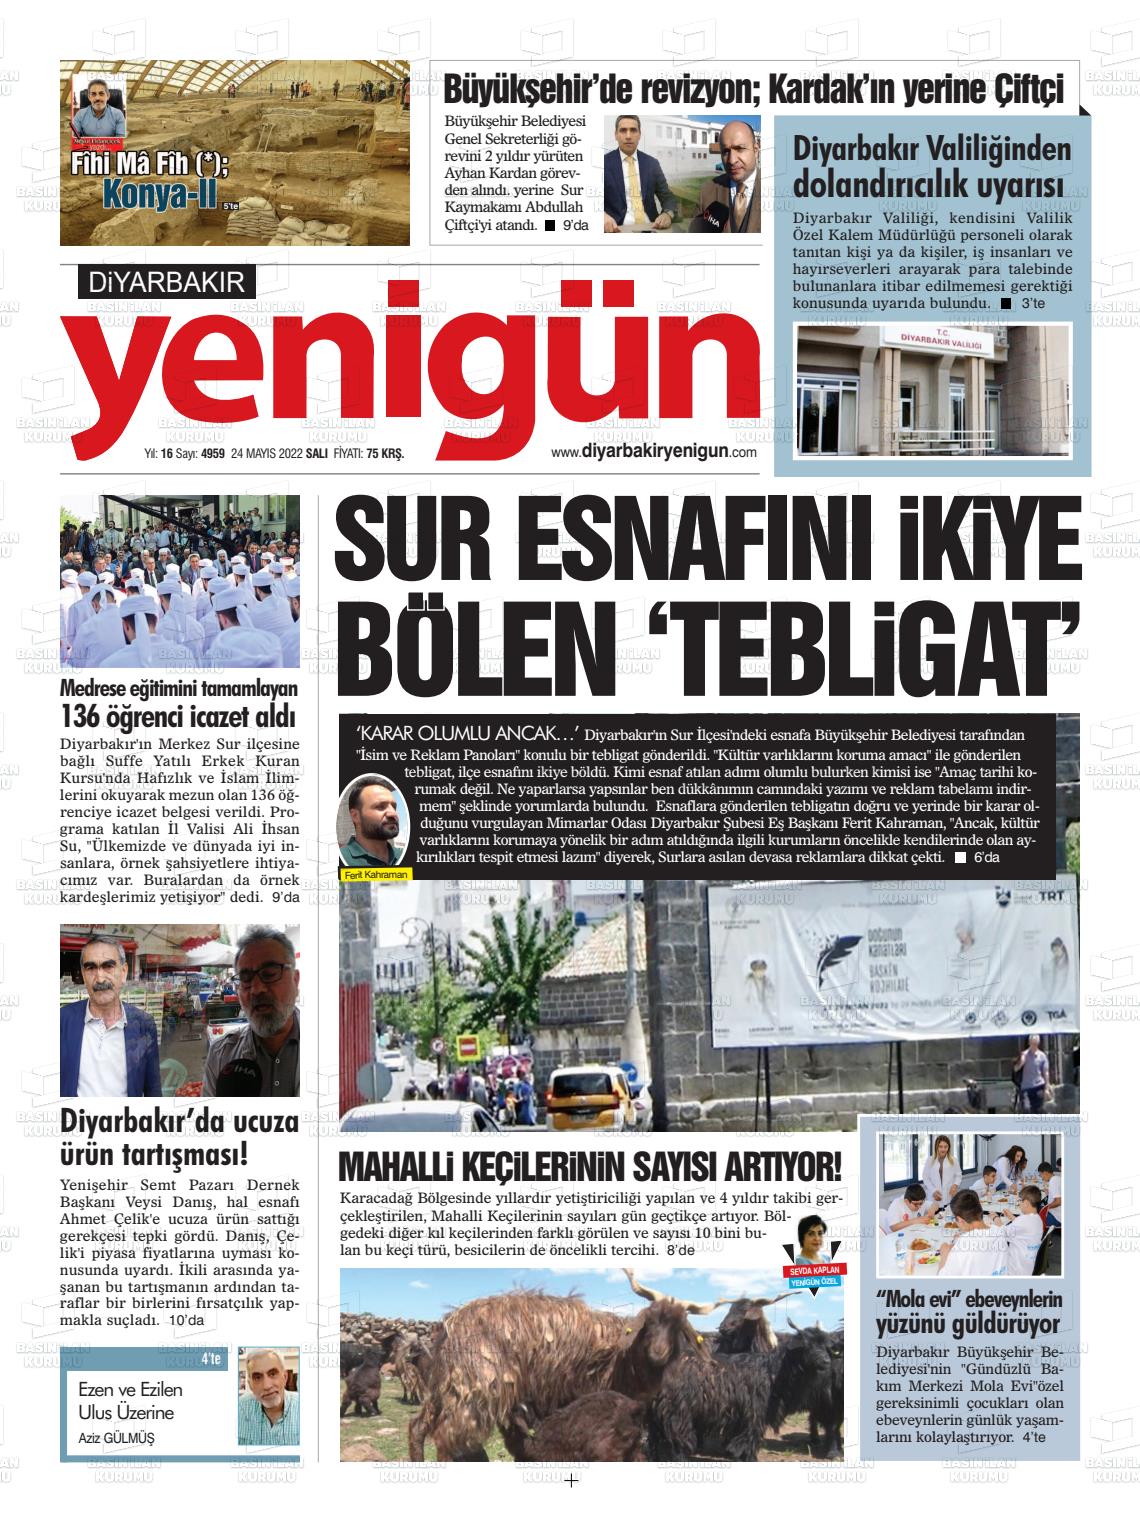 24 Mayıs 2022 Diyarbakır Yenigün Gazete Manşeti